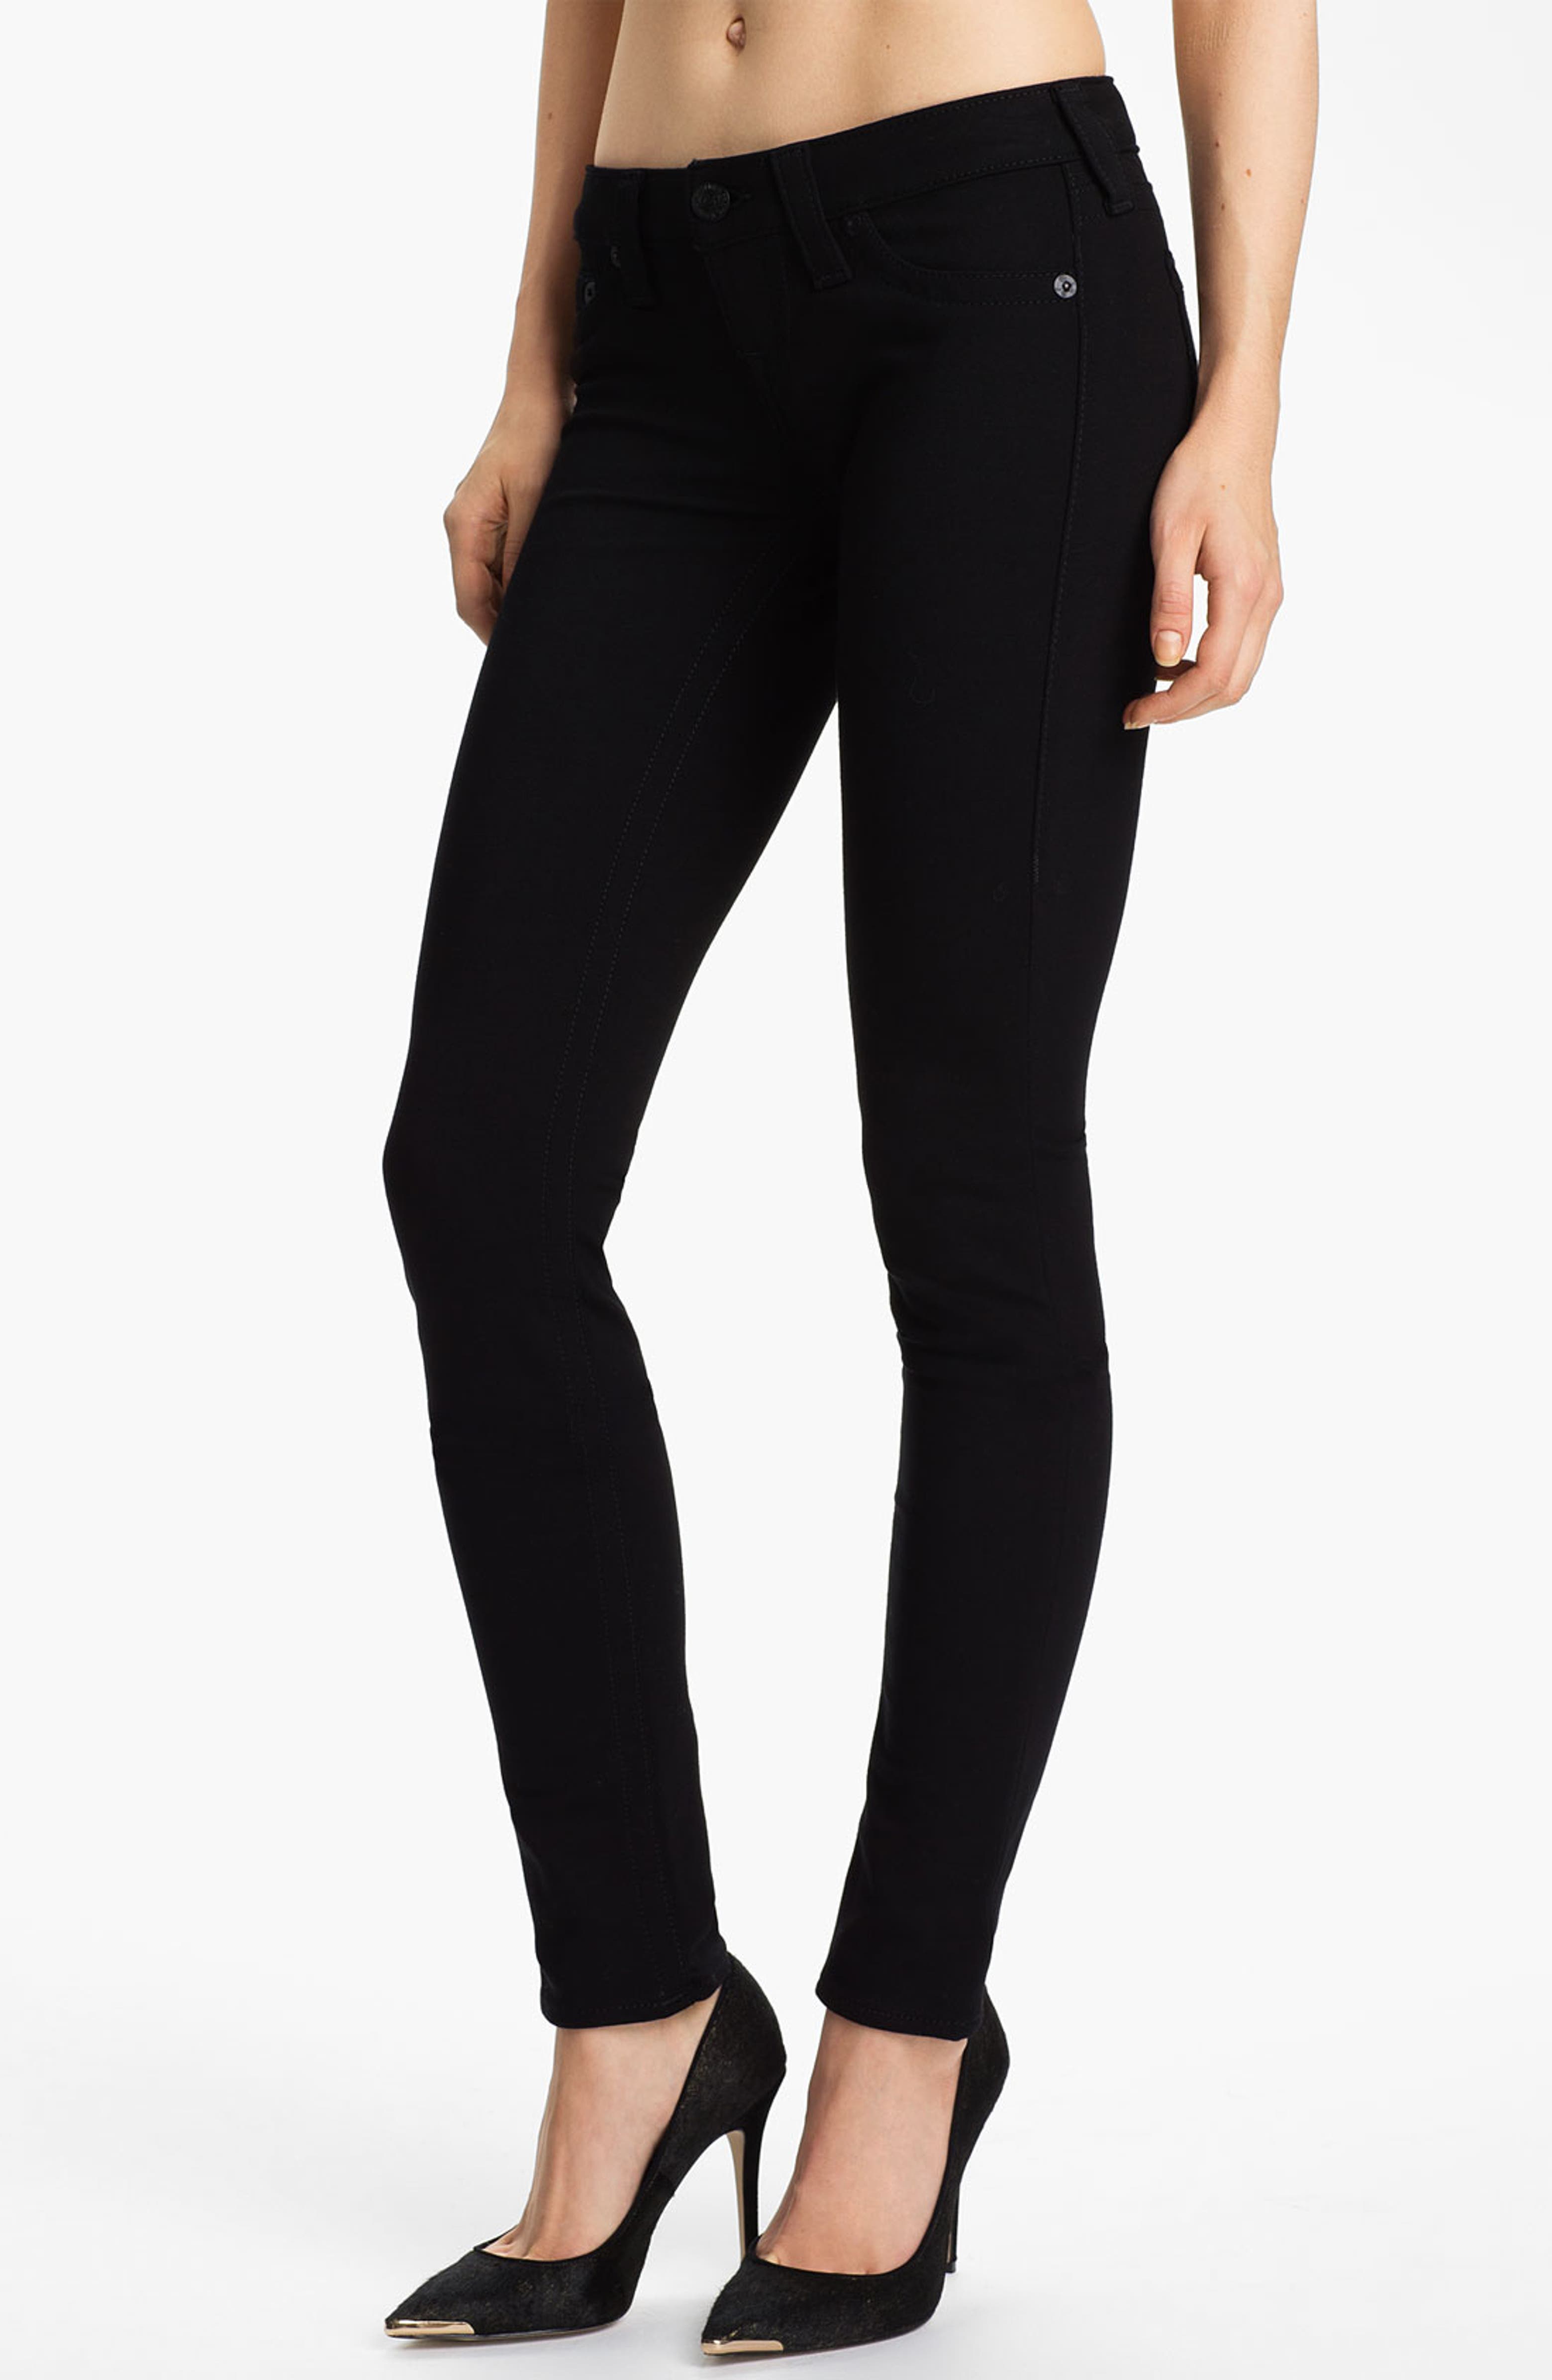 True Religion Brand Jeans 'Stella' Stretch Ponte Knit Pants | Nordstrom